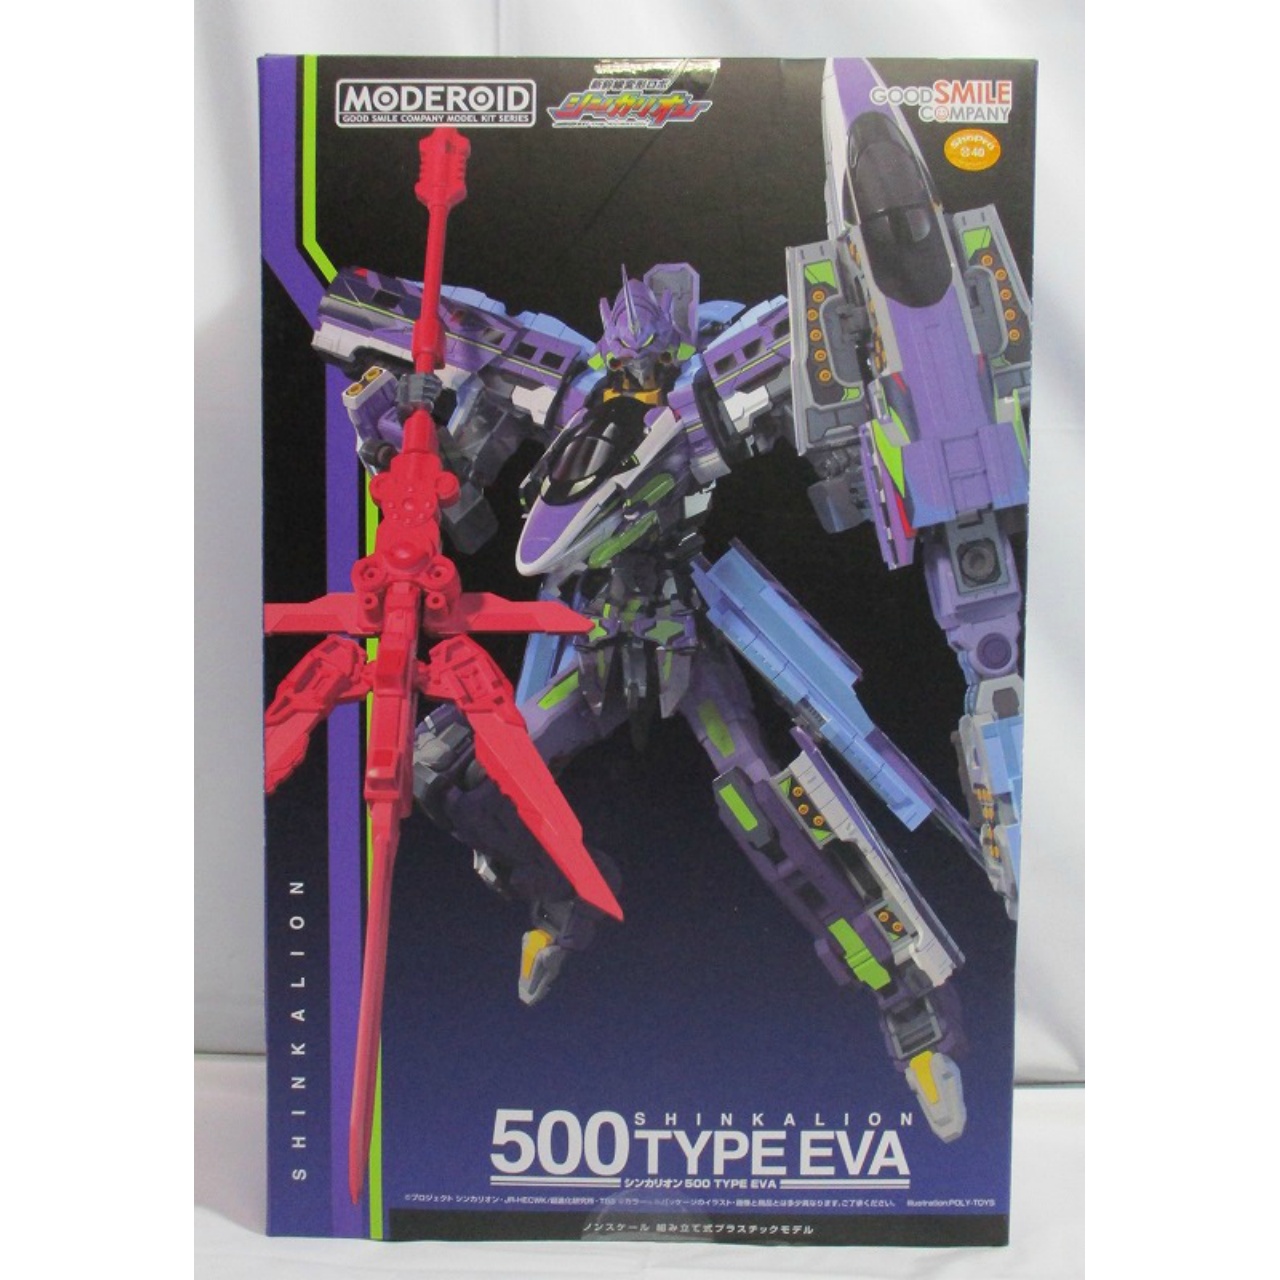 MODEROID Shinkalion 500TYPE EVA Plastic Model